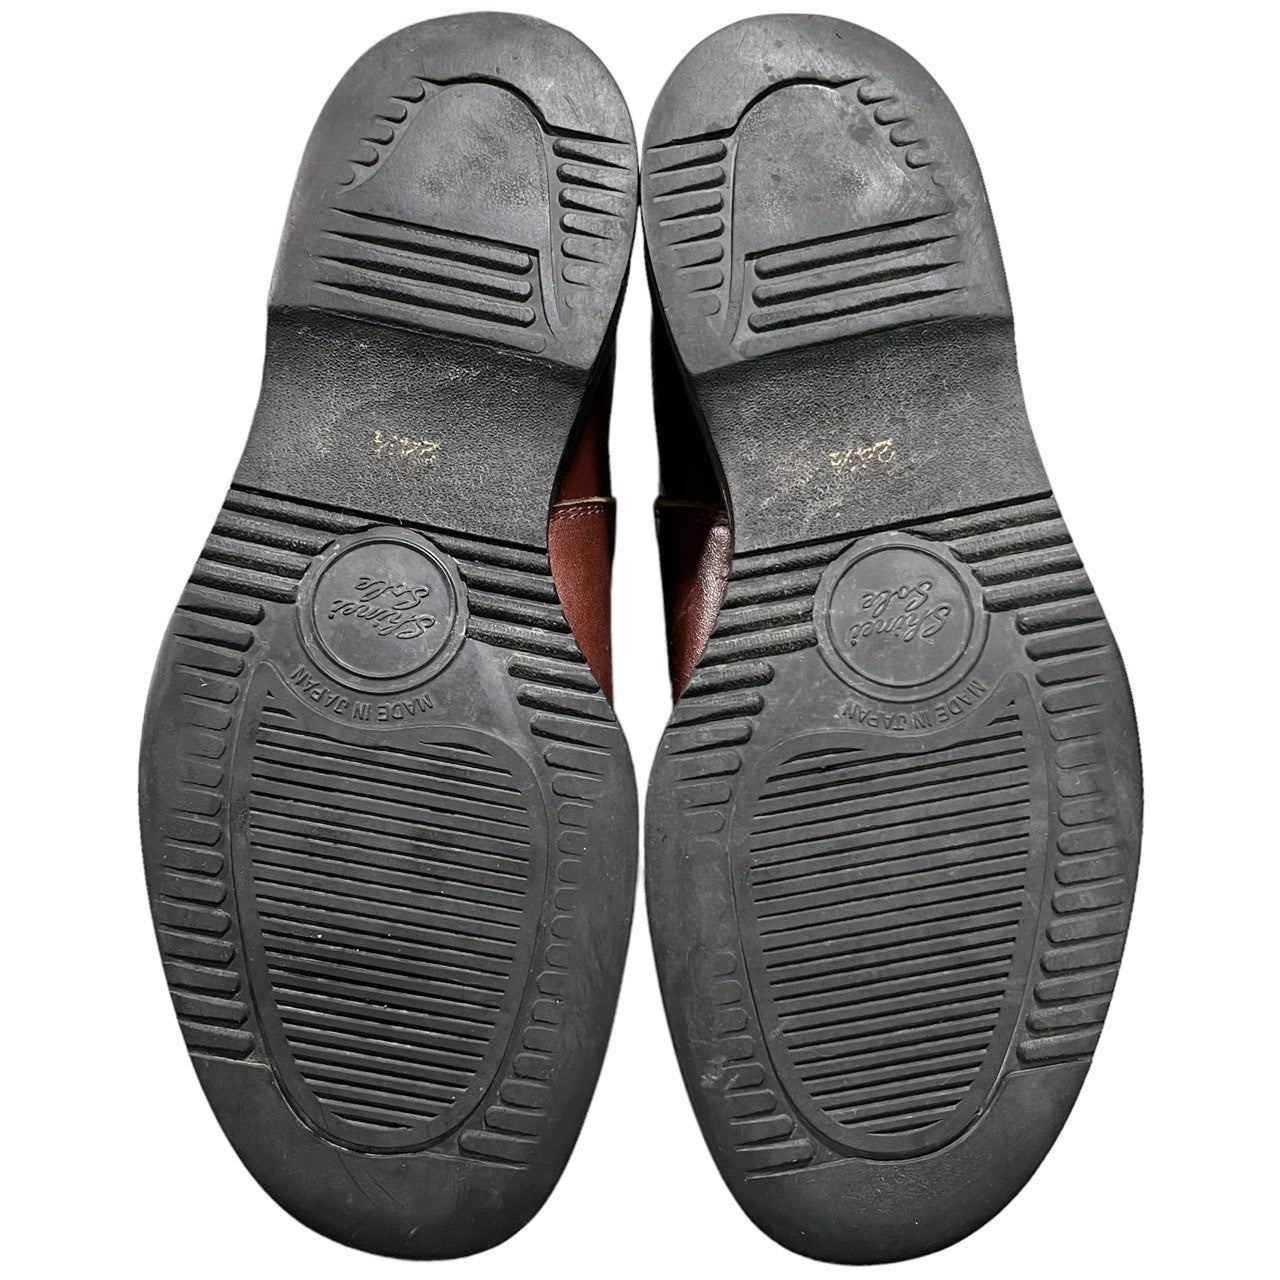 COMME des GARCONS HOMME PLUS(コムデギャルソンオムプリュス) 03AW カーブ期 Center zip side gore boots センタージップ サイドゴア ブーツ 革靴 24 1/2 (24.5cm程度) ブラウン 日本製 2003AW「大人の不良」